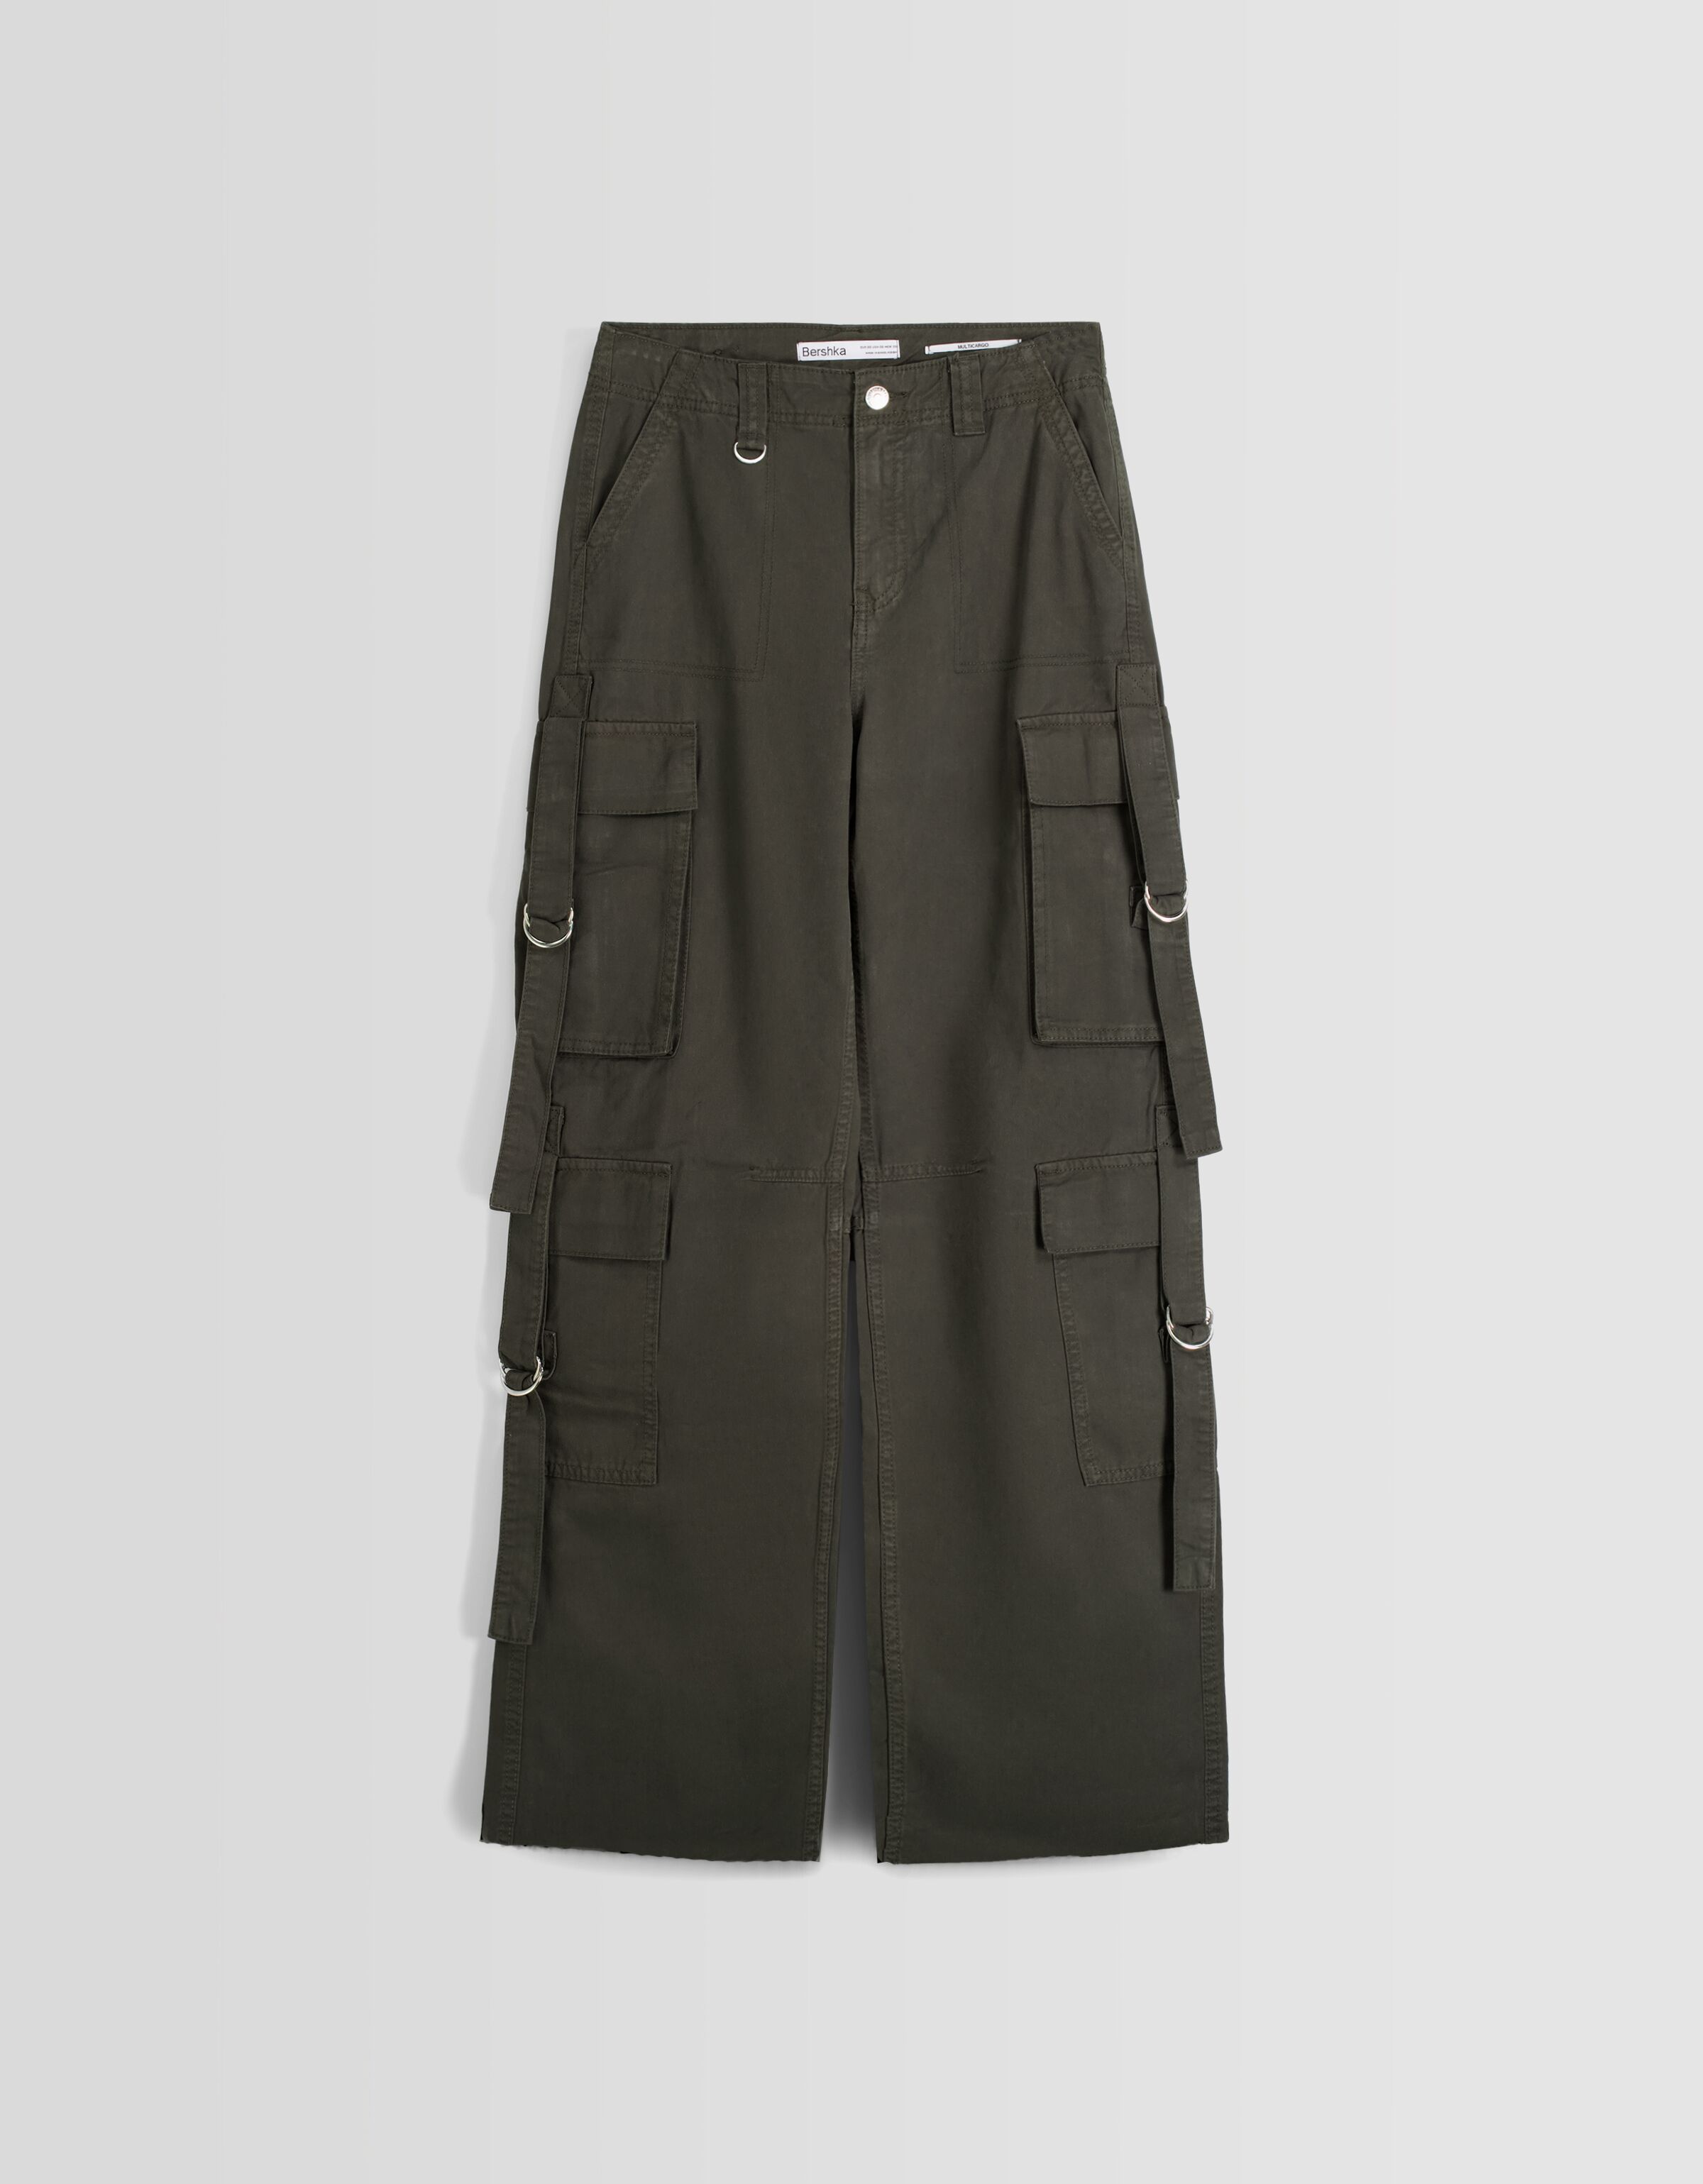 Buy Ho Bindaass Mens Slim fit Cargo Pant Stretchable six Pocket Cargo  Trousers for Men  Olive Khaki Grey 30 AshGrey at Amazonin